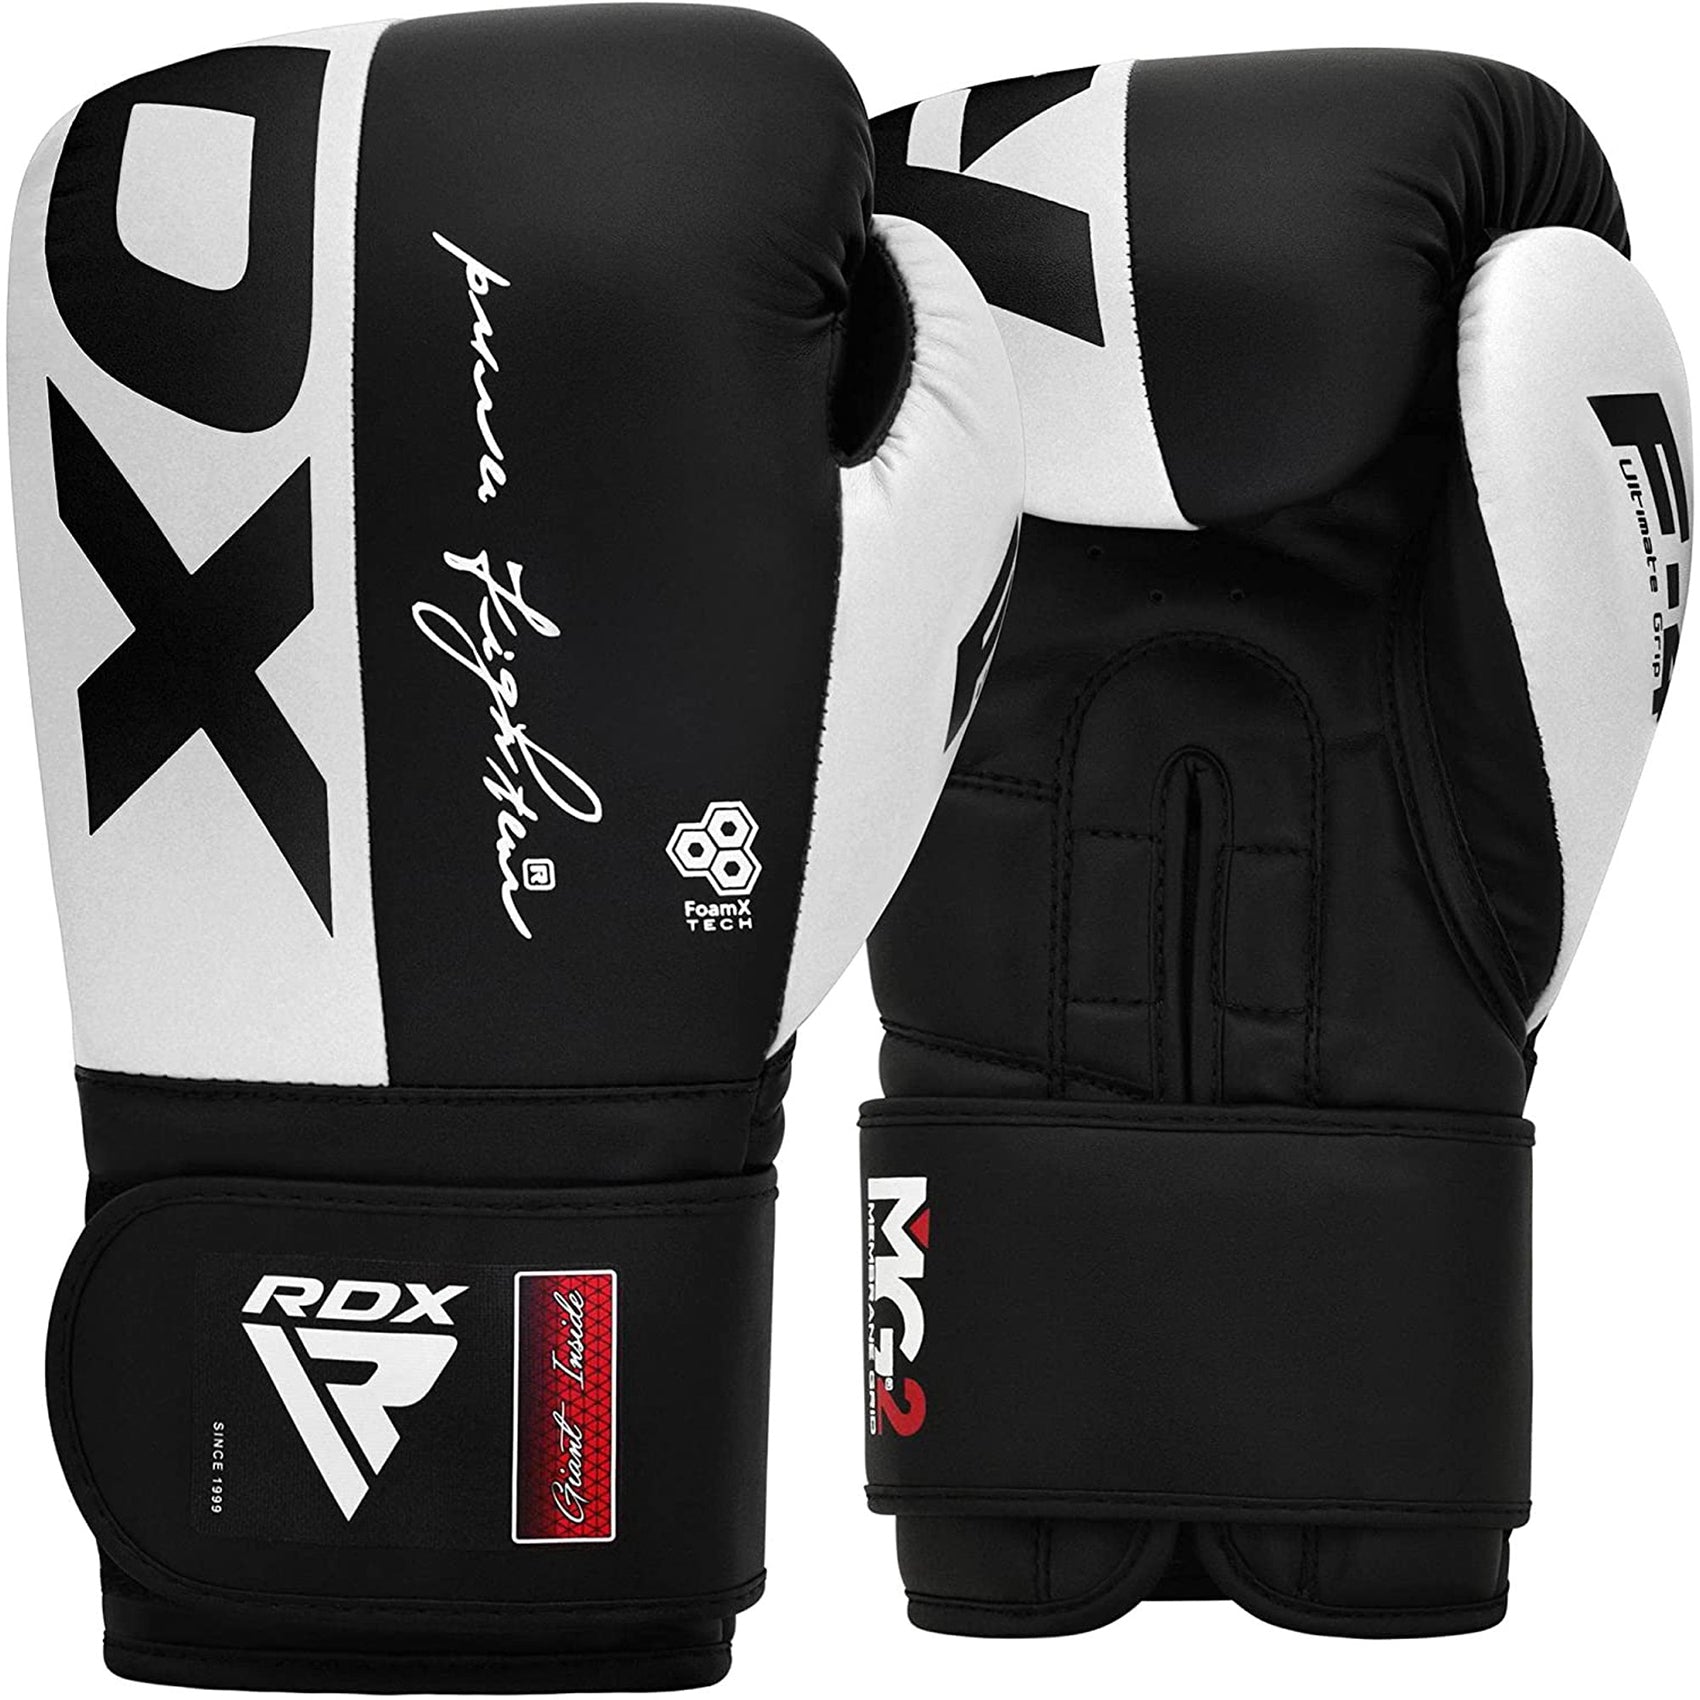 RDX REX F4 MMA, BJJ, Muay Thai, Kickboxing, Training Boxing Gloves - WHITE/BLACK - 14oz - Pro-Distributing